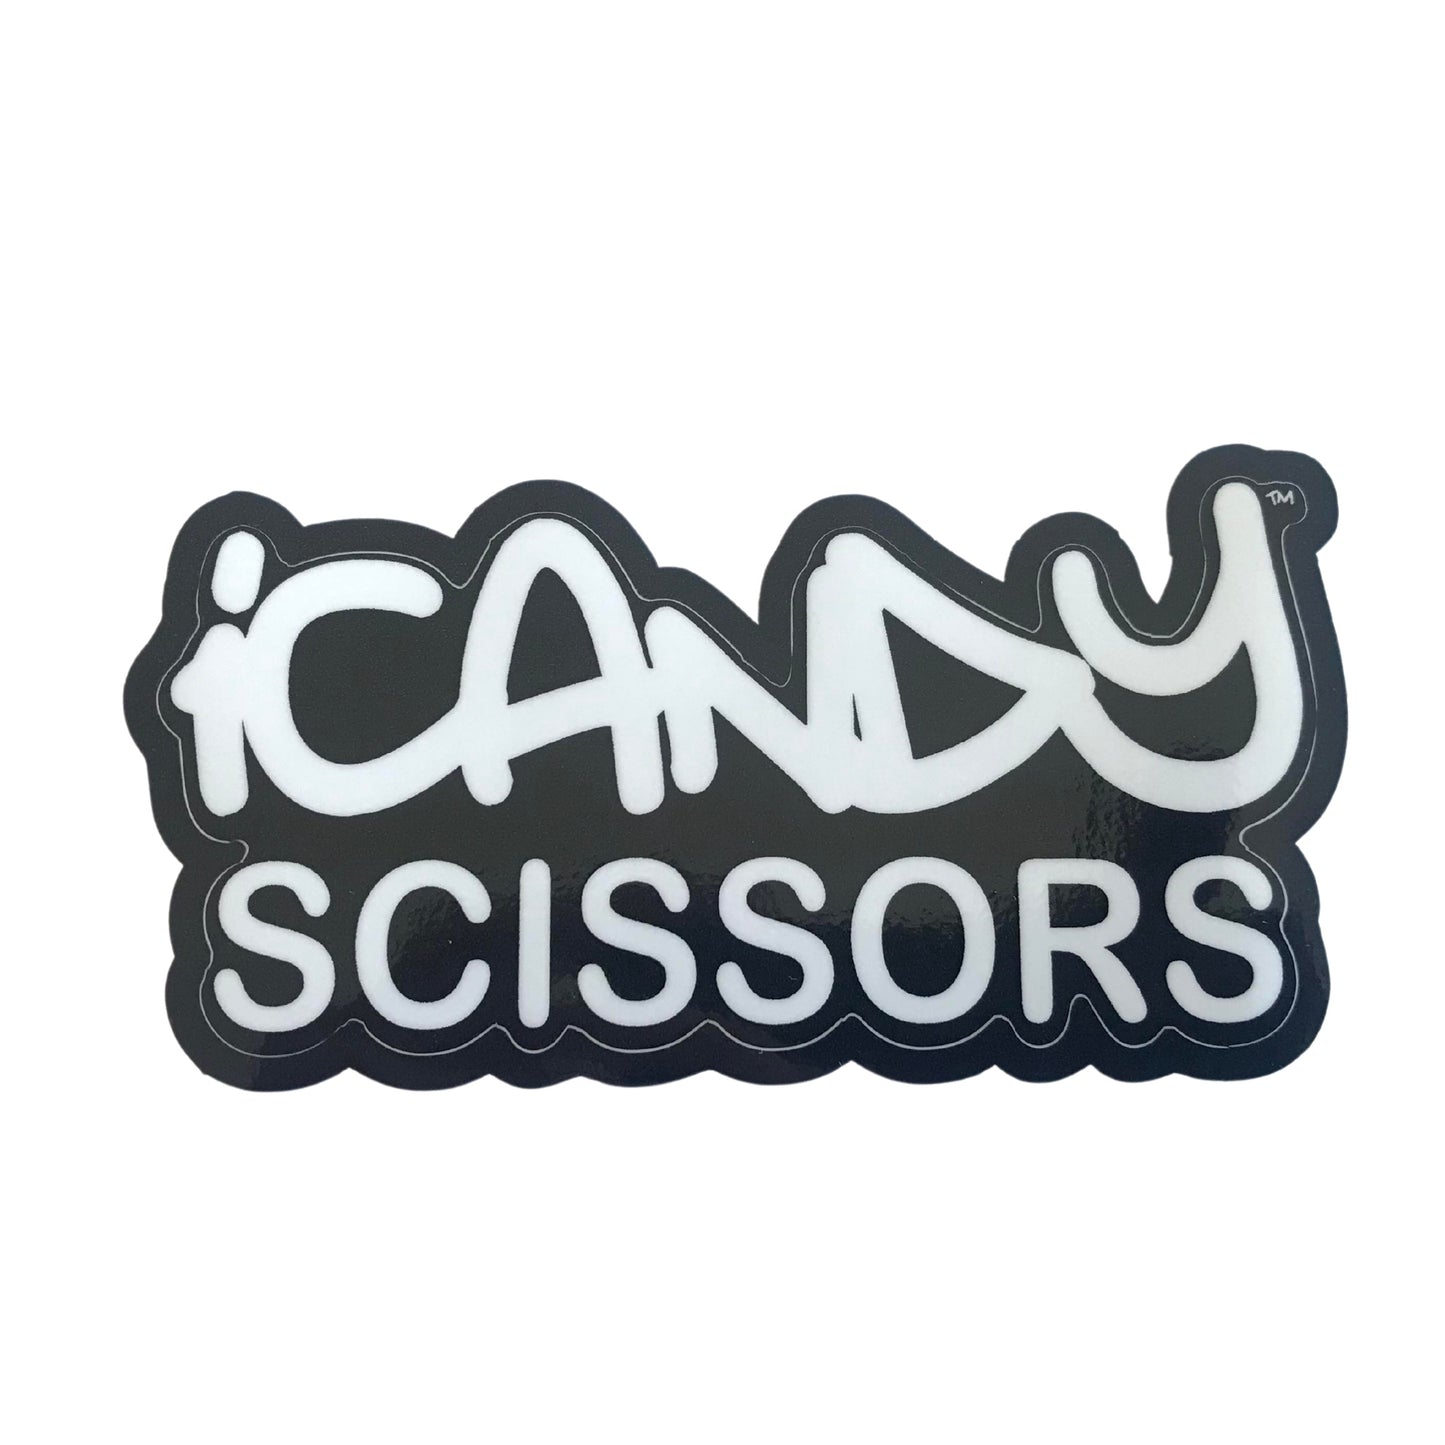 iCandy Scissors Logo on White Background 